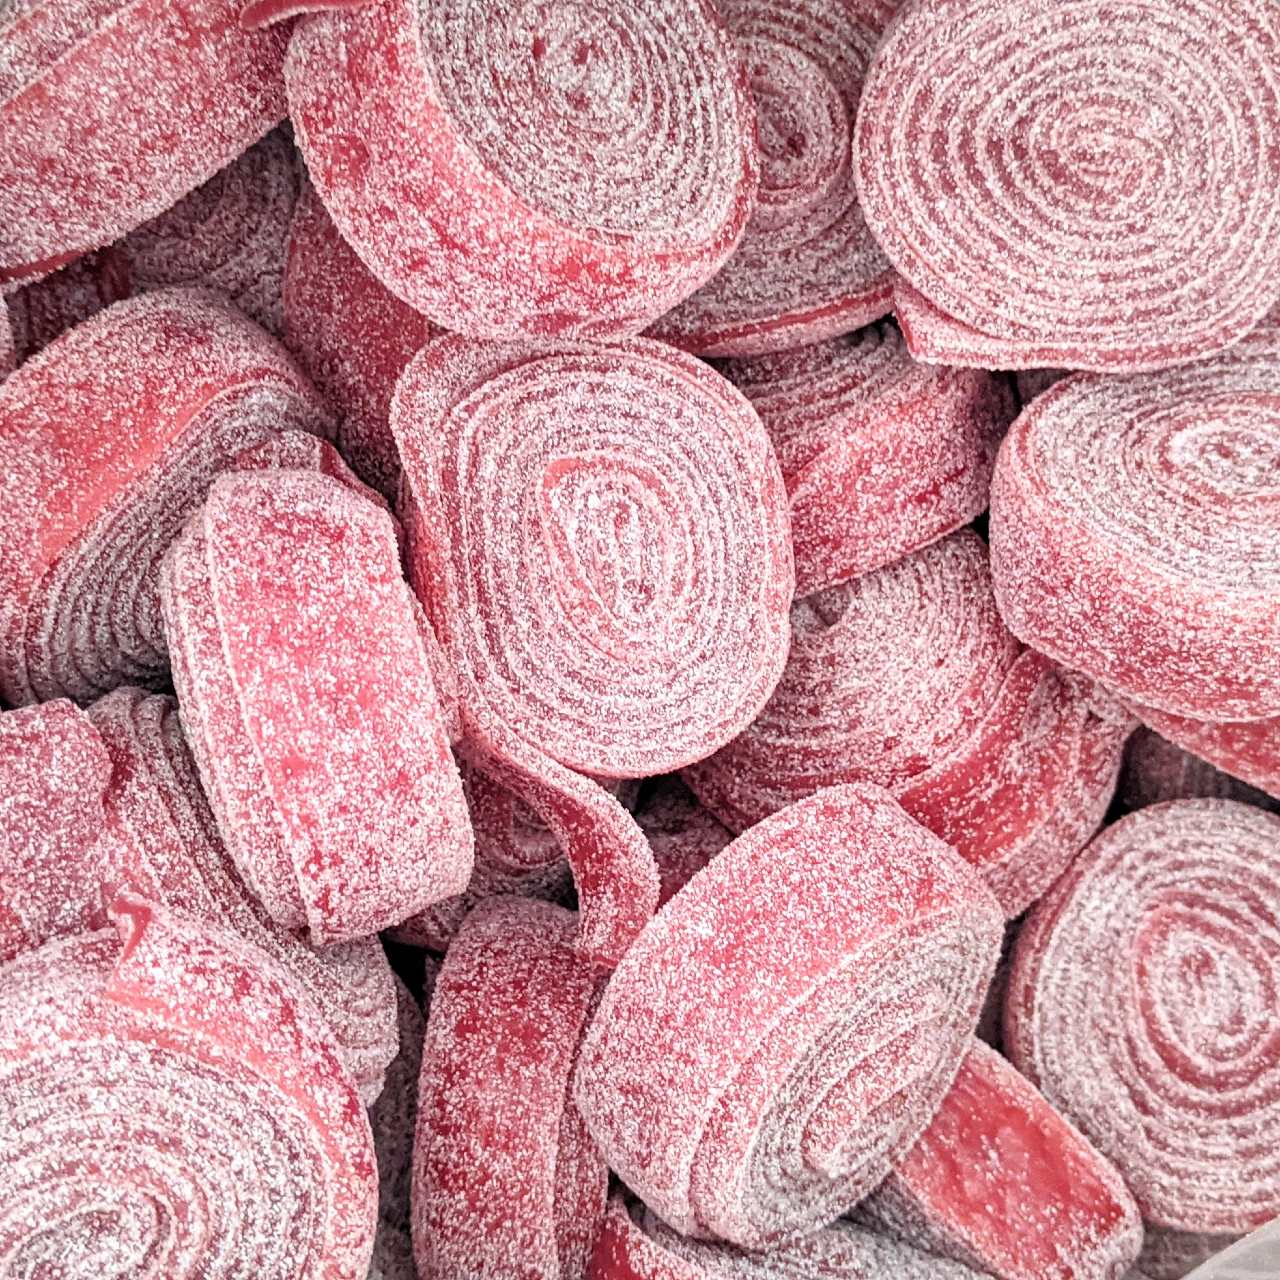 Vegan sweets strawberry belts